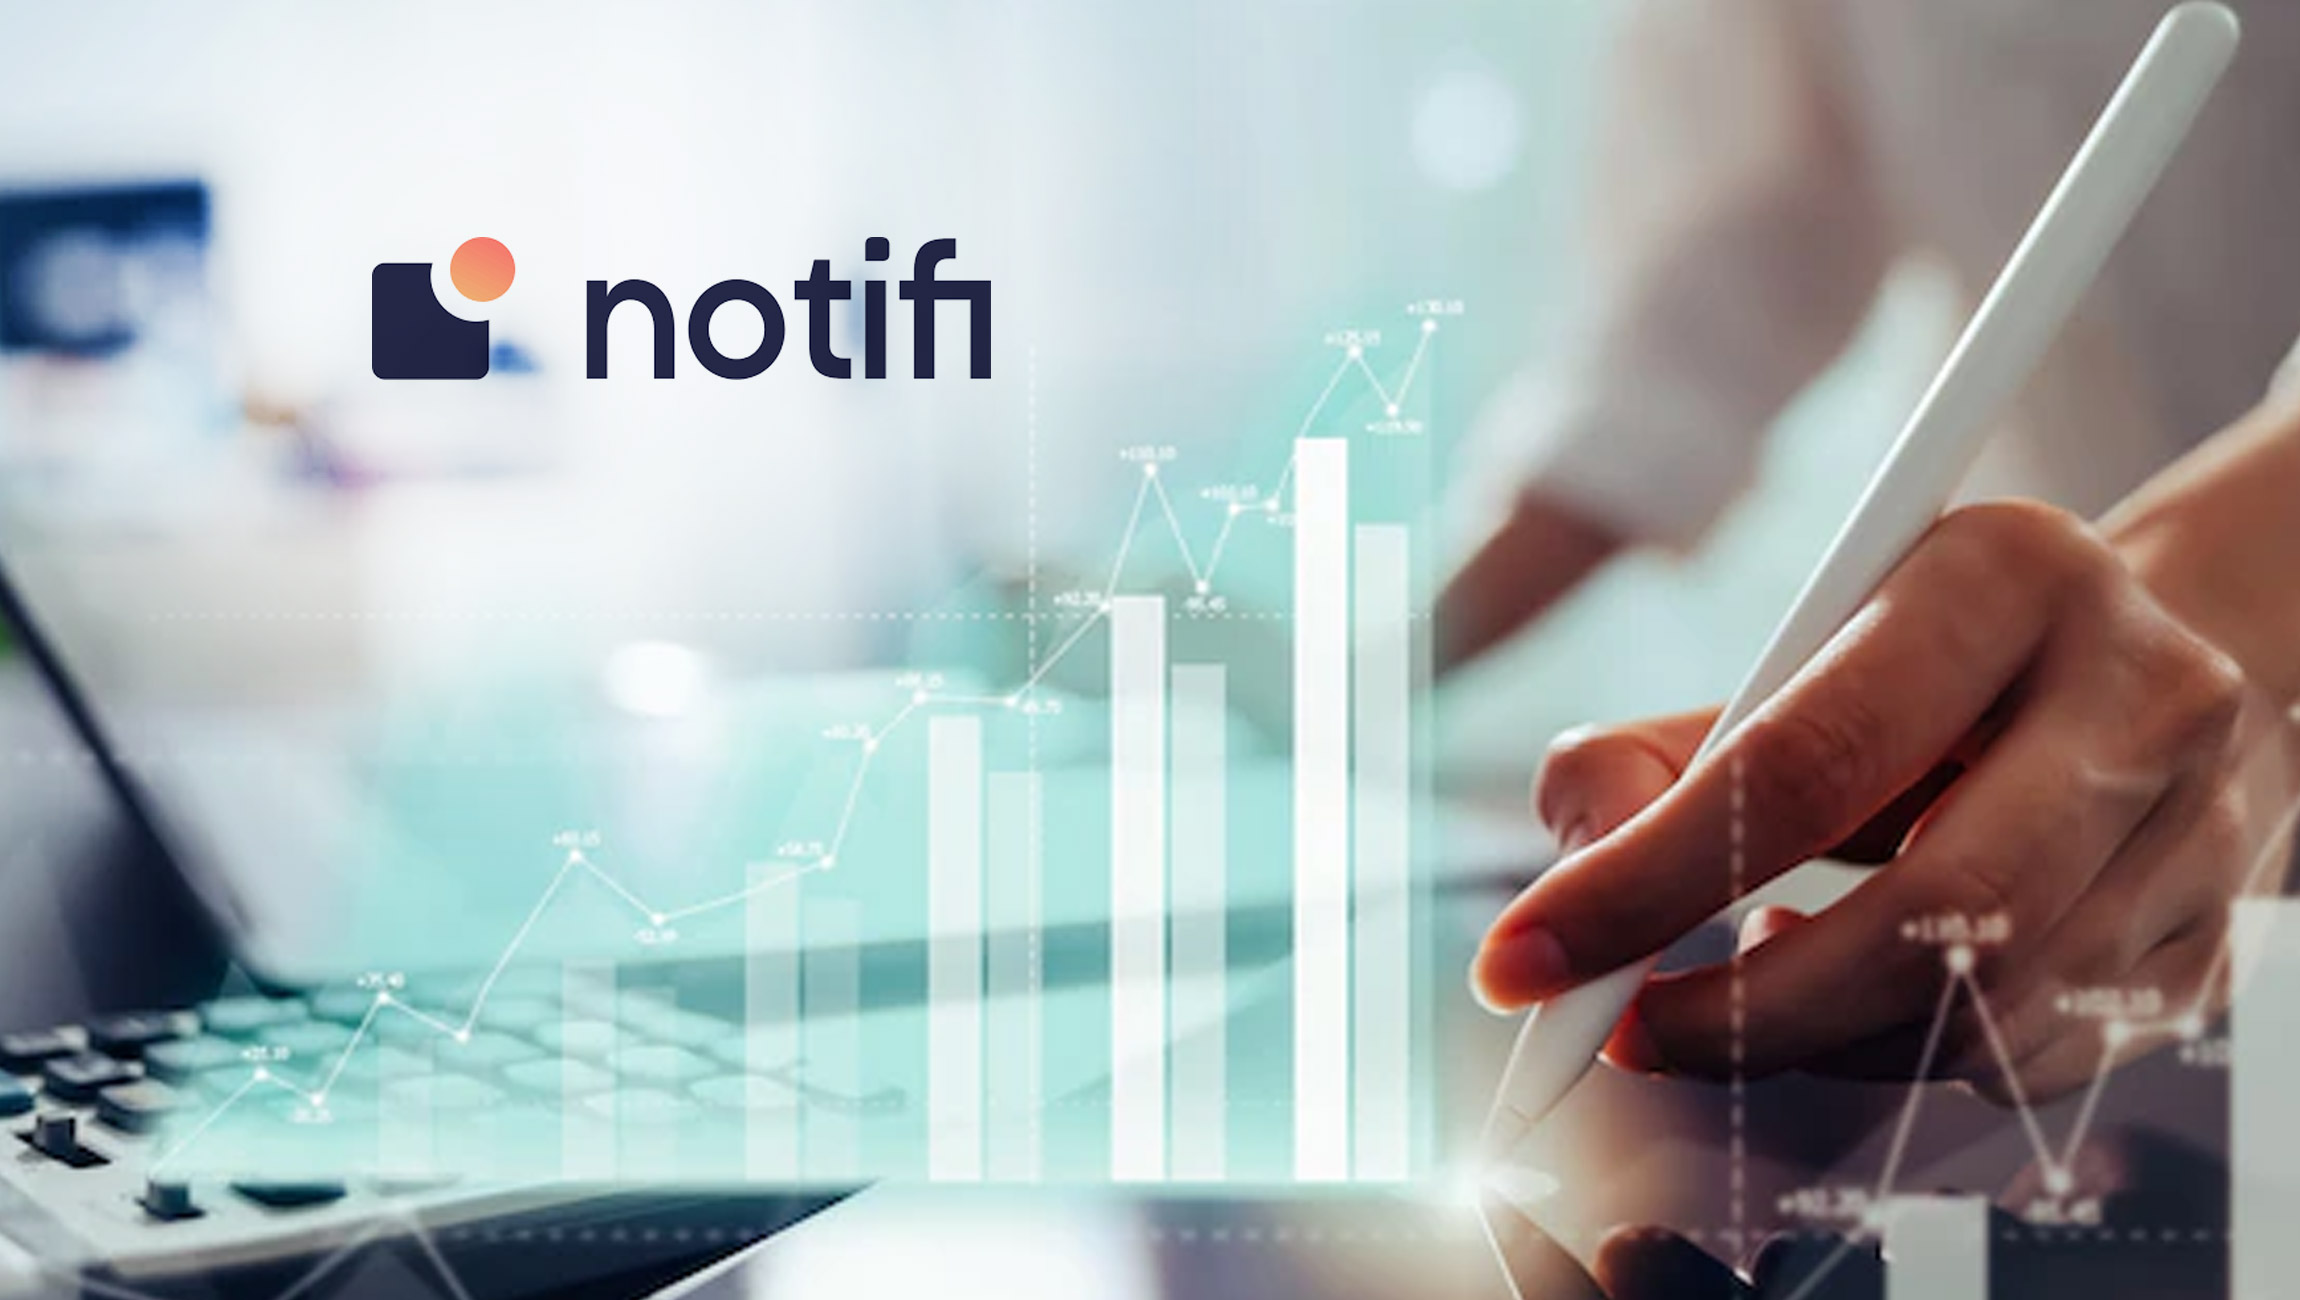 Notifi Raises $10M Seed Round to Expand its Communication Infrastructure Platform 1